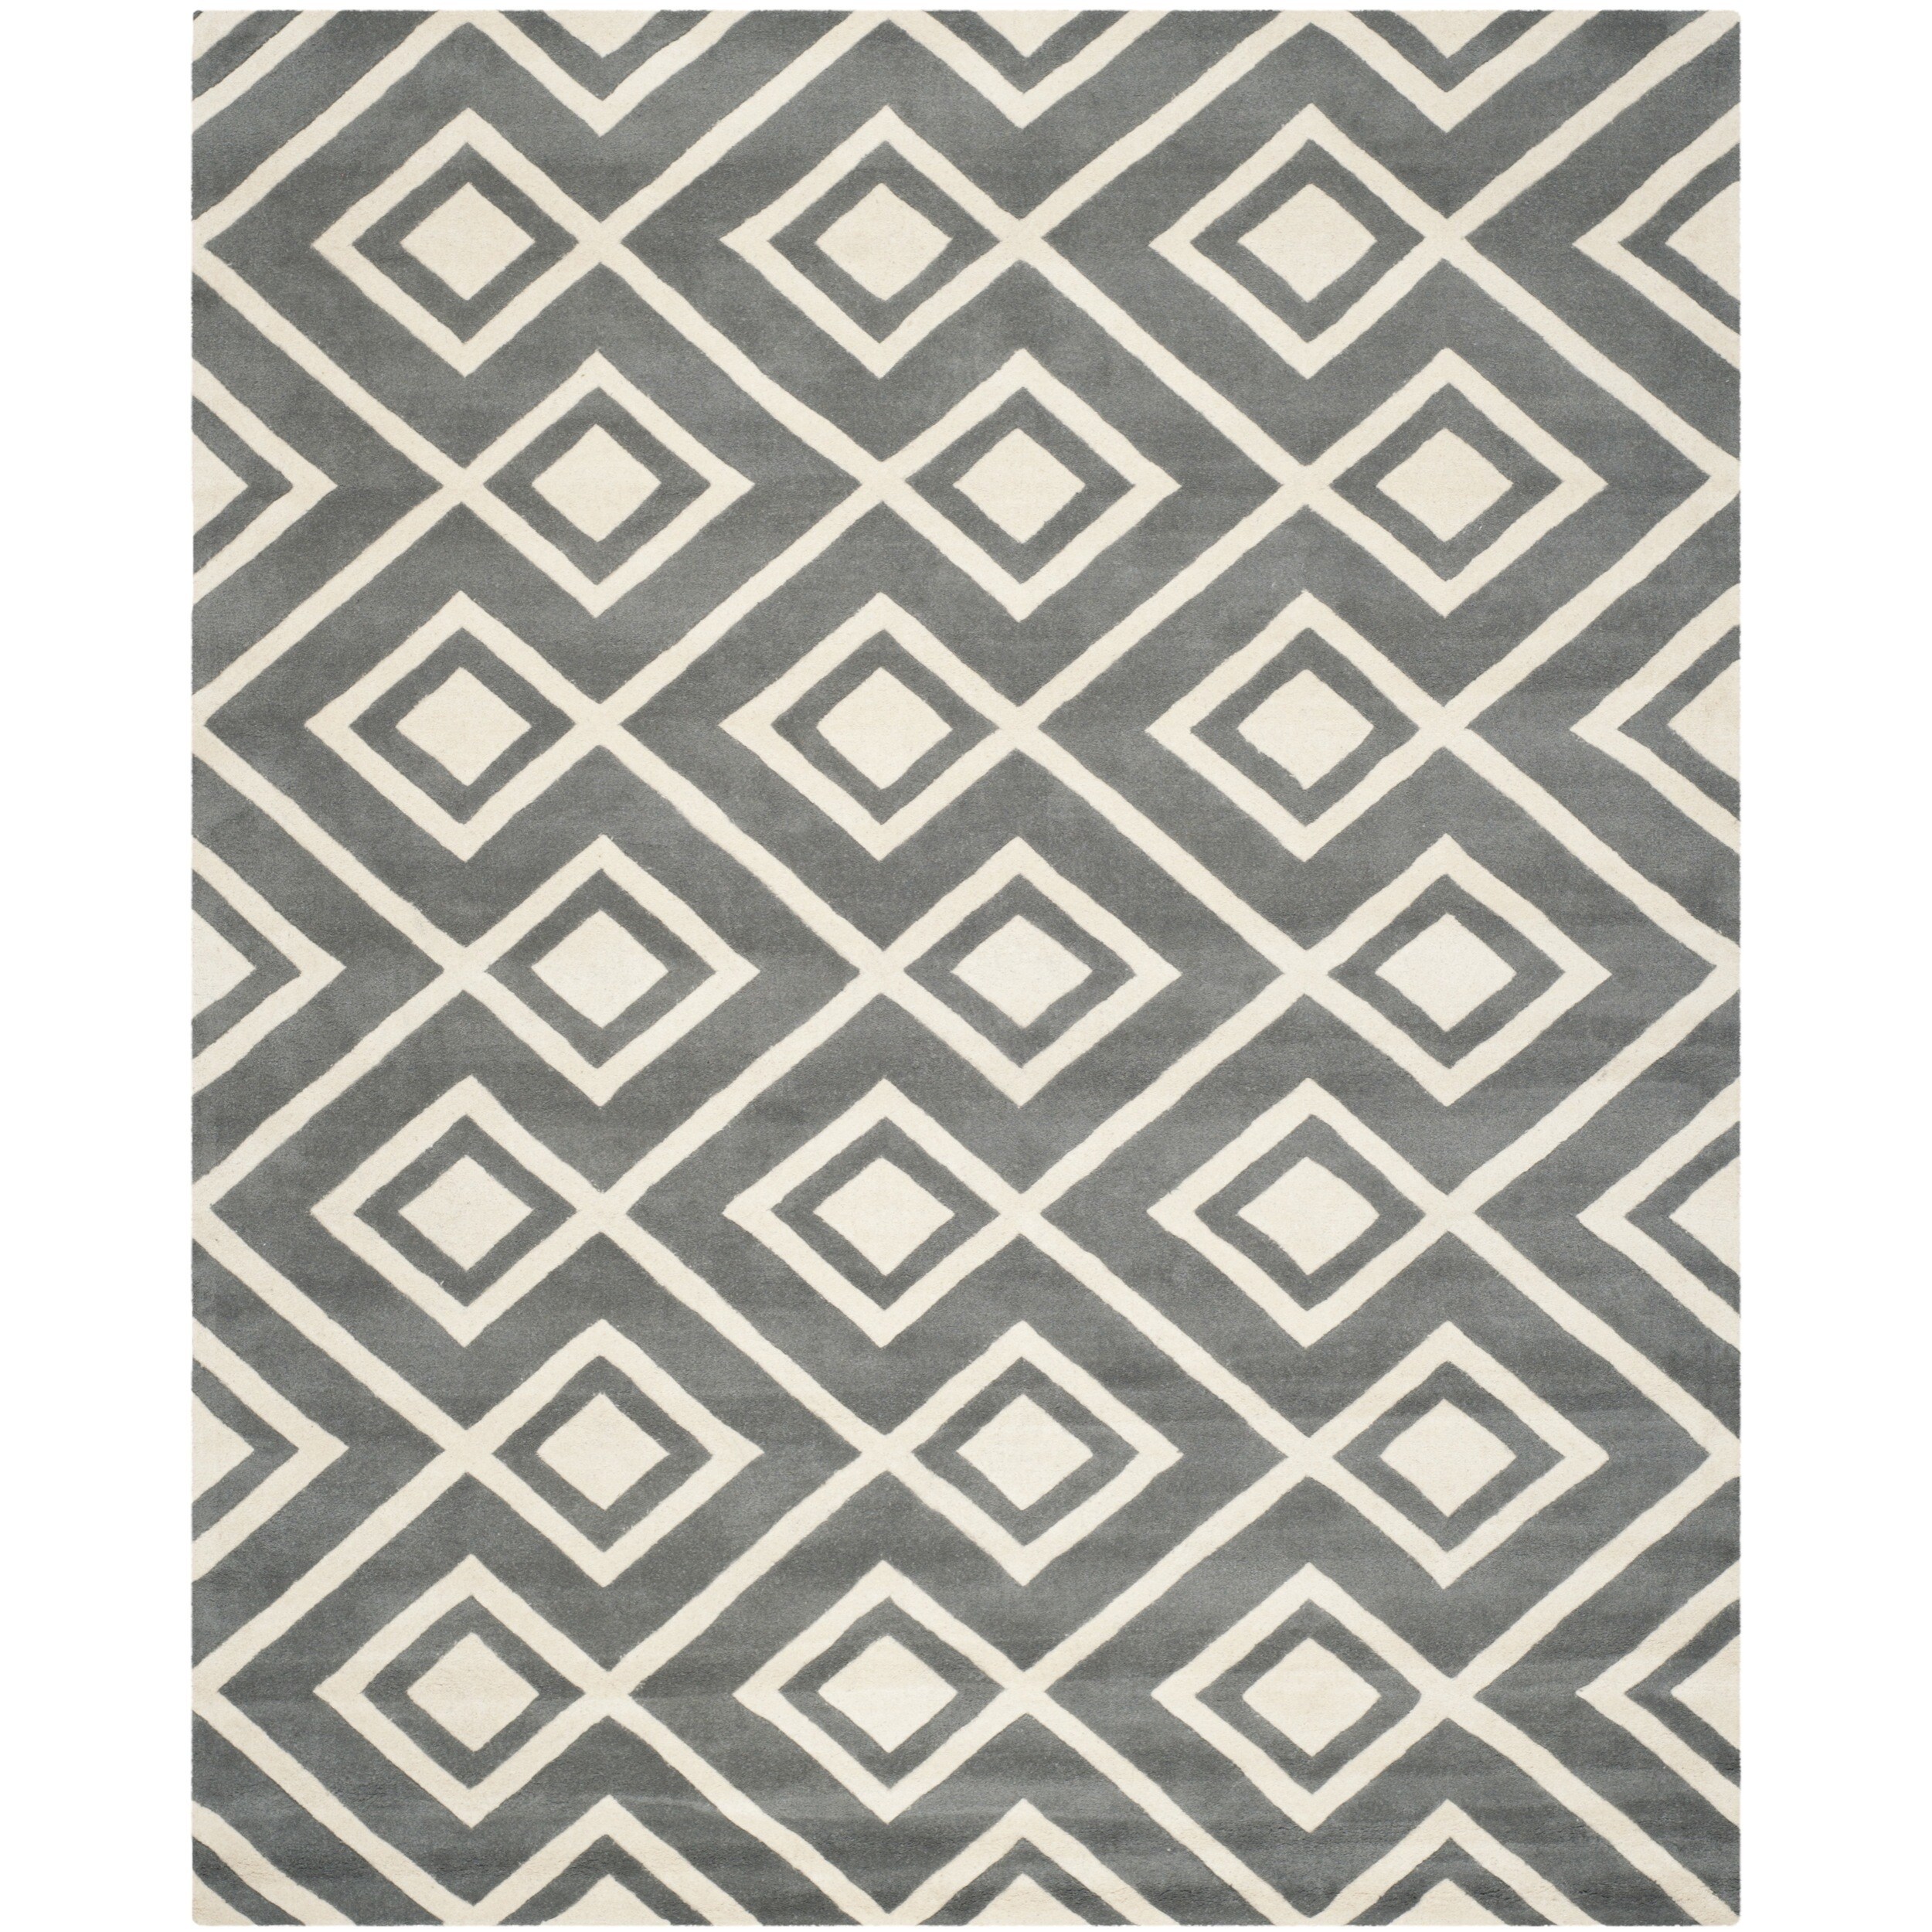 Safavieh Handmade Moroccan Chatham Square pattern Dark Gray/ Ivory Wool Rug (8 X 10)